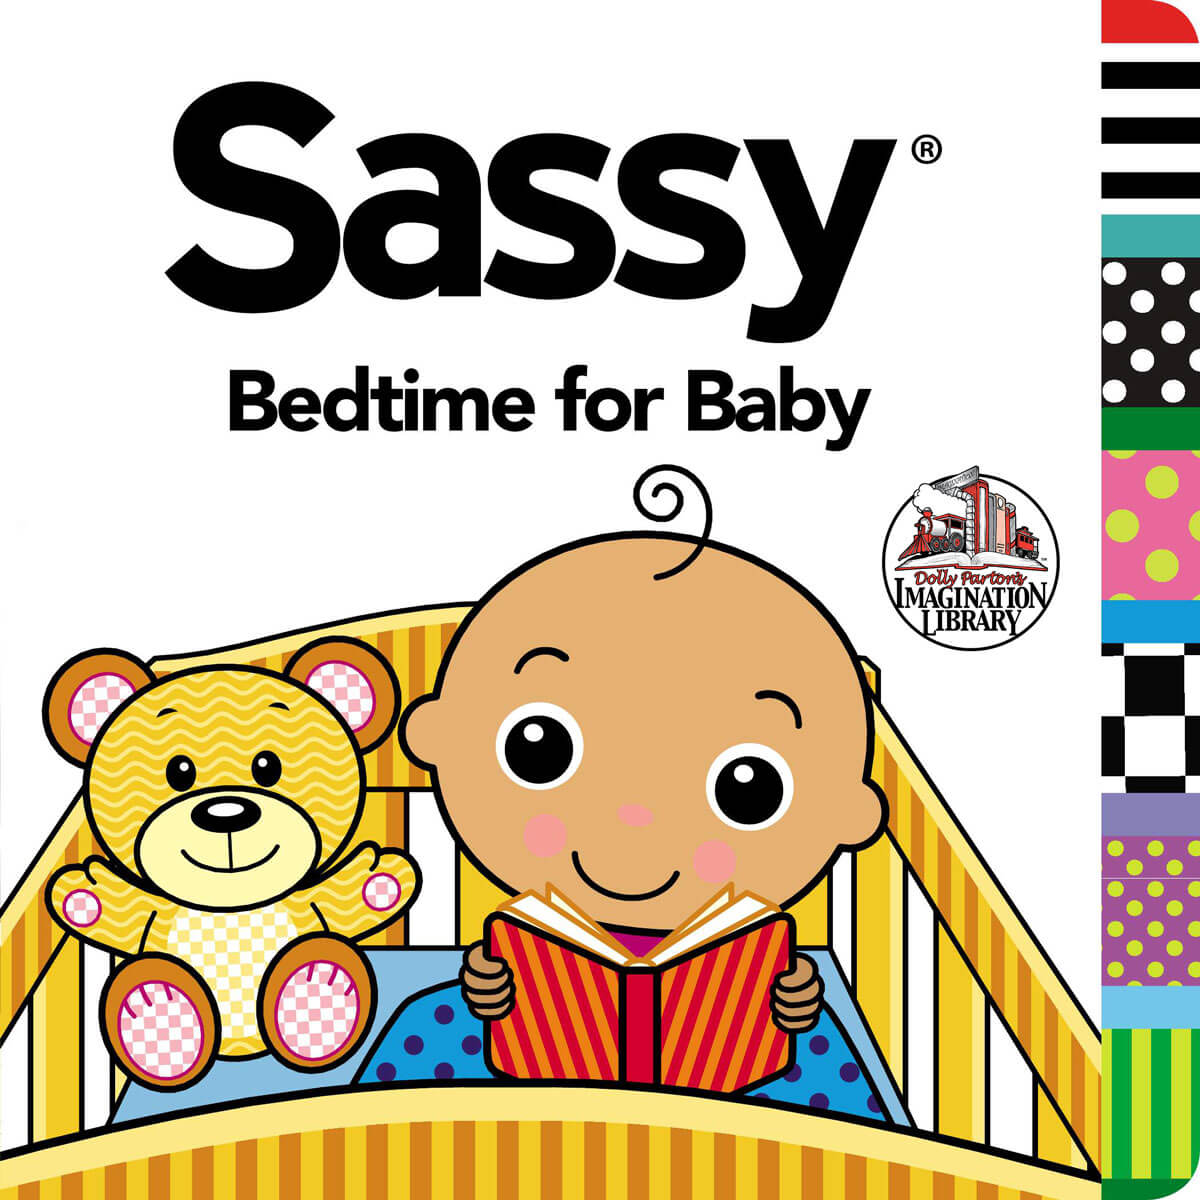 Sassy Bedtime for Baby